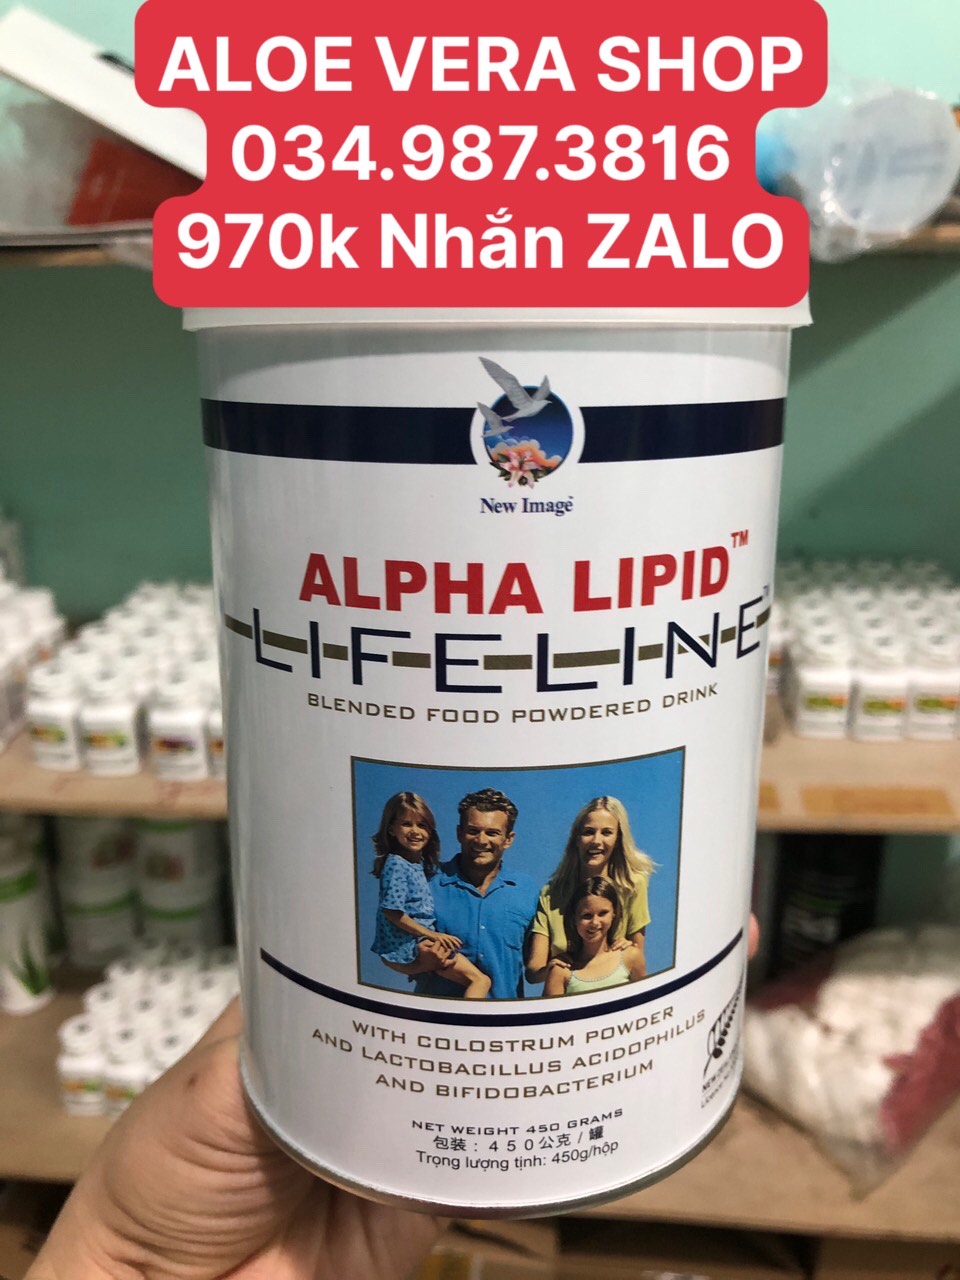 970k Sữa Non ALPHA LIPID LIFELINE của New Zealand